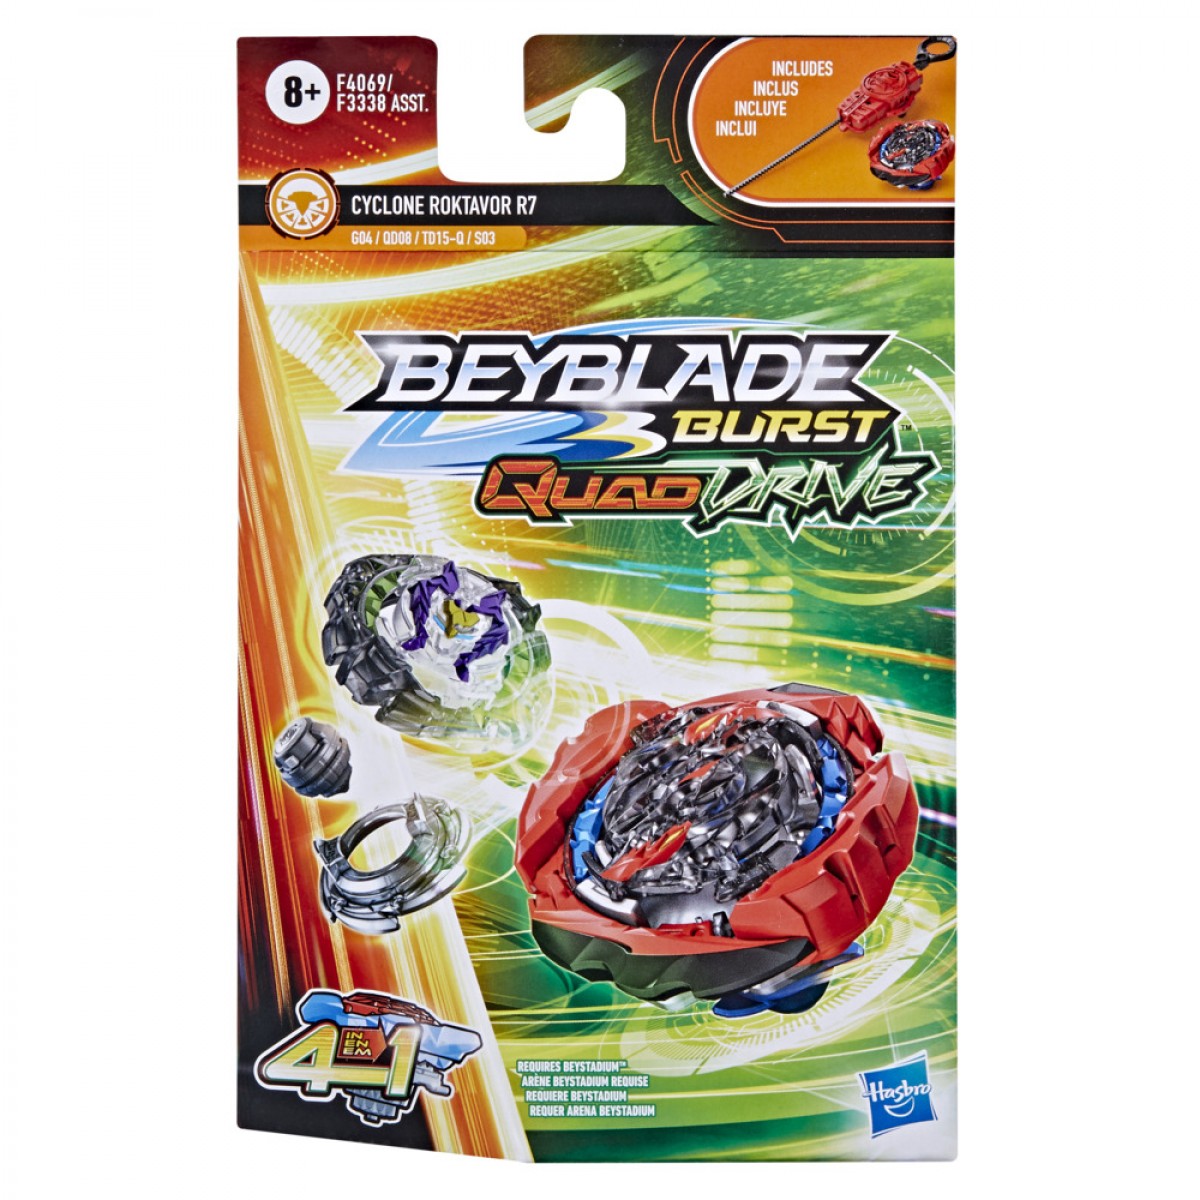 Beyblade Burst Quaddrive Cyclone Roktavor R7 Spinning Top Starter Pack, 8Yrs+